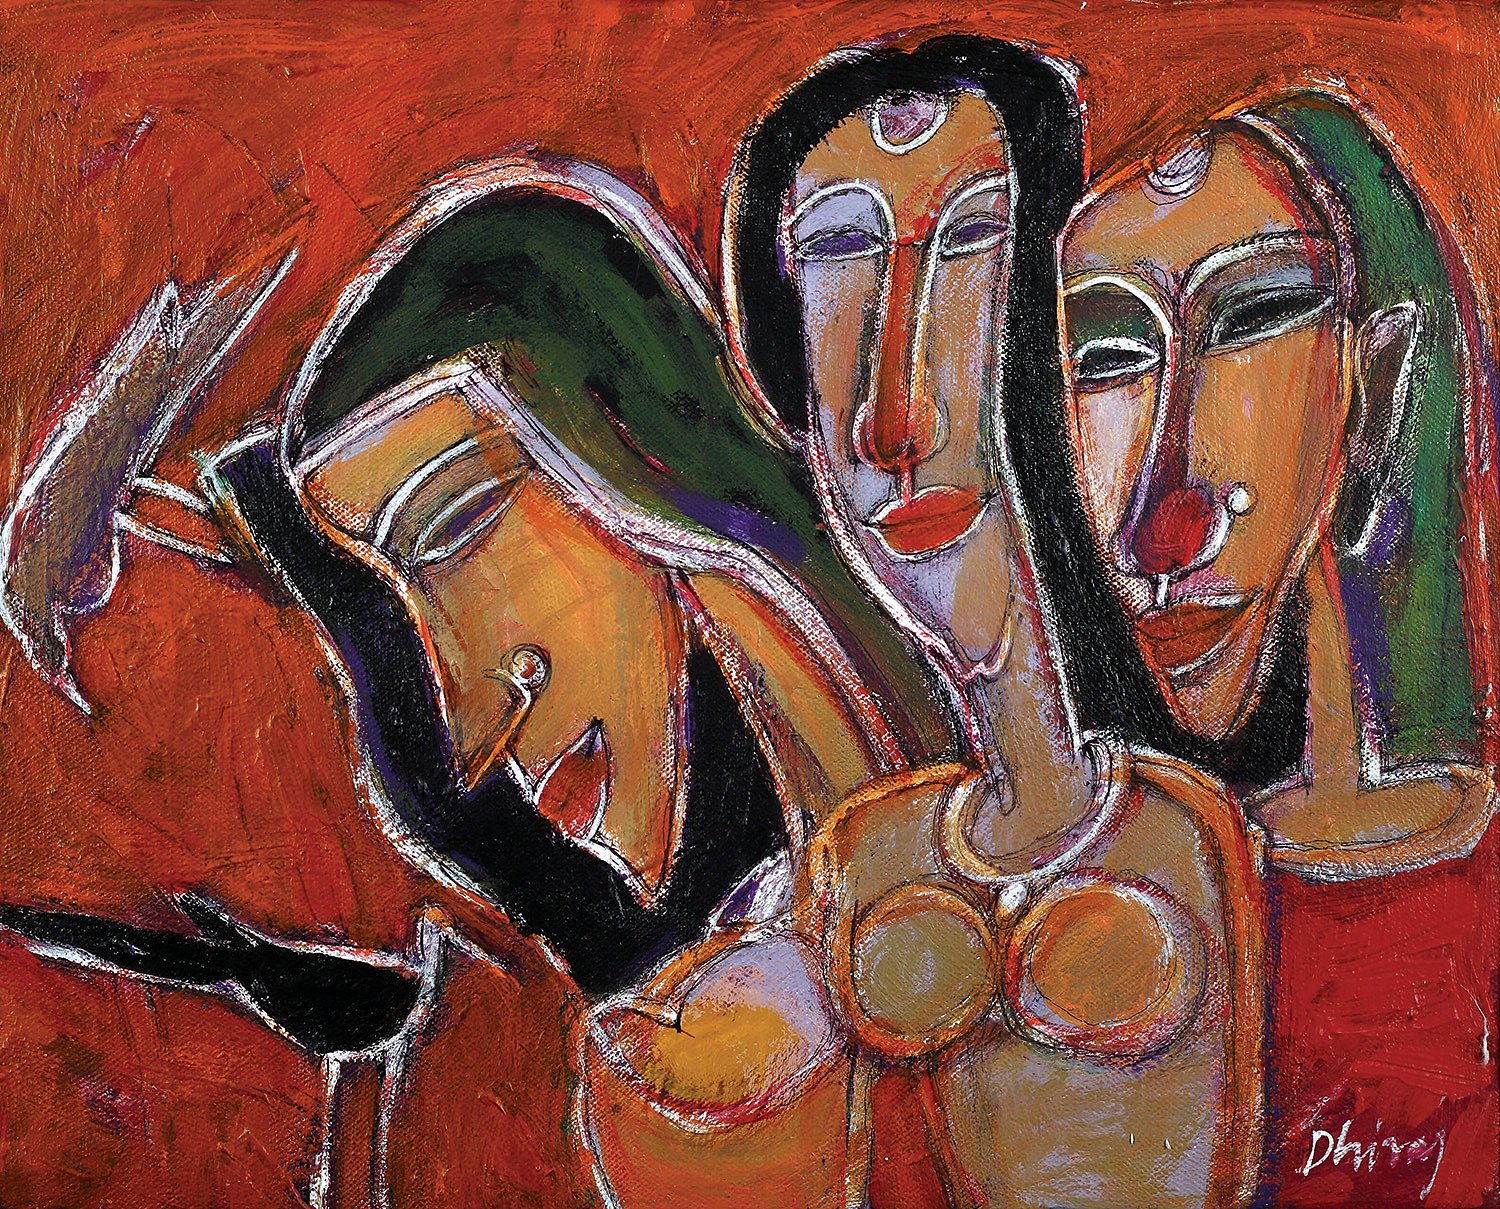 Trio|Dhiraj Choudhury- Acrylic on canvas, 2016, 12 x 15 inches